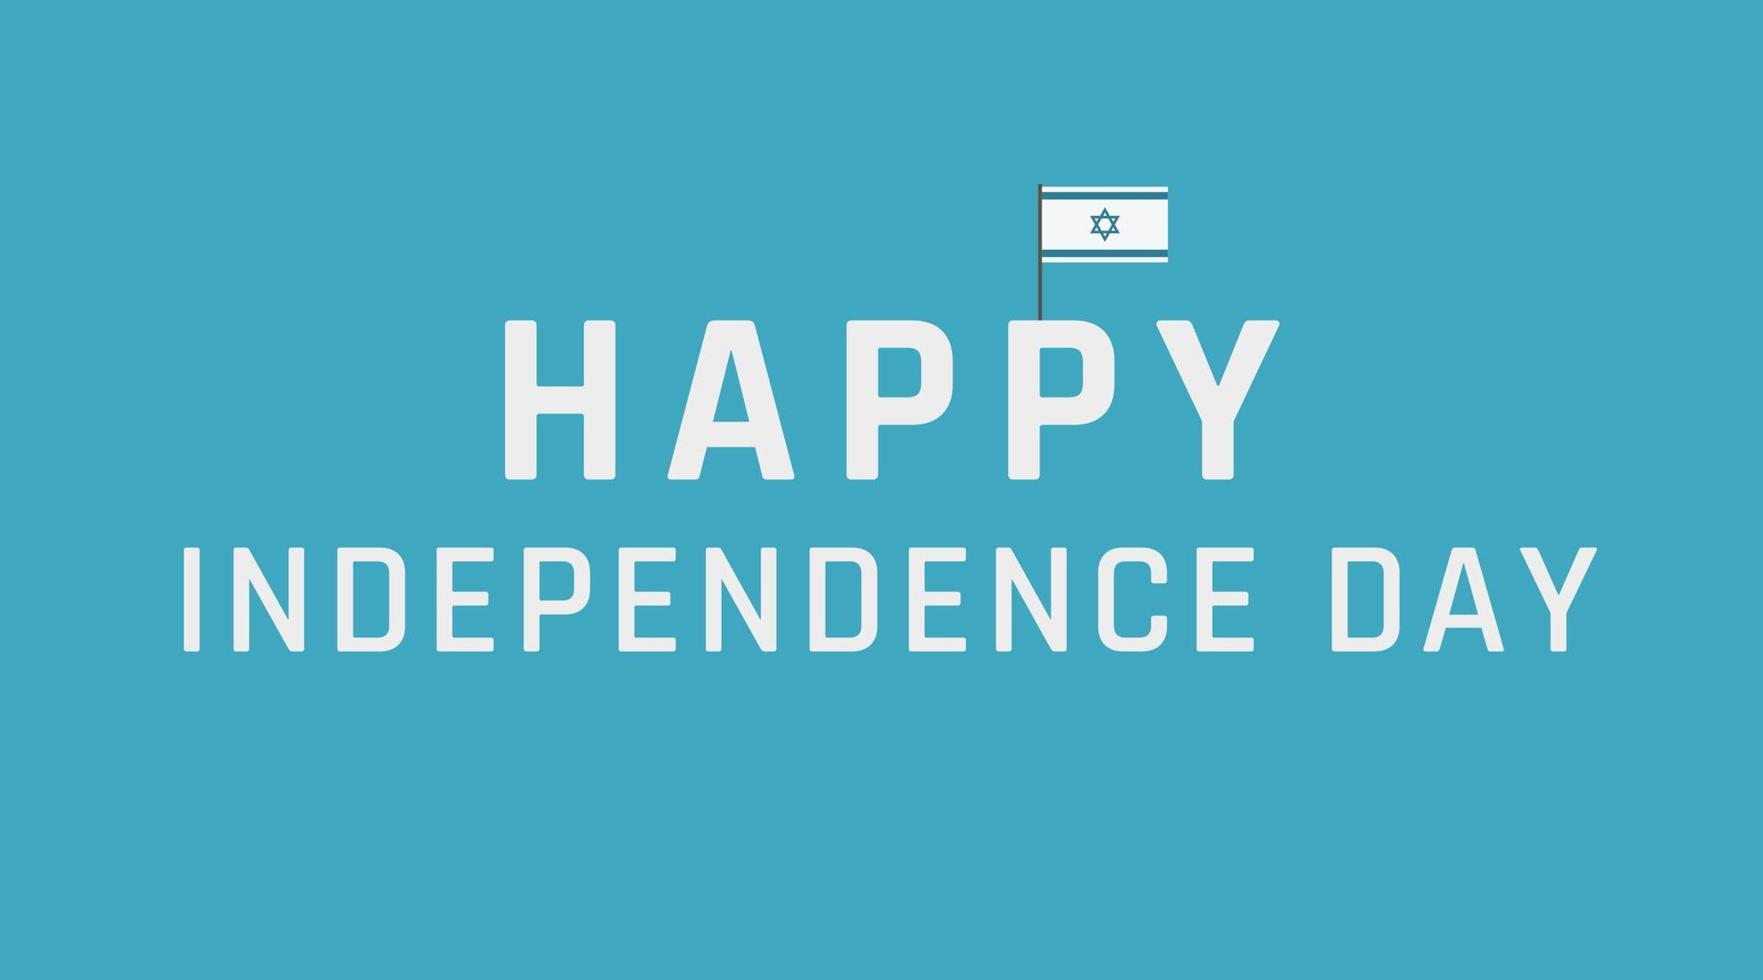 Israël onafhankelijkheidsdag vakantie wenskaart met israël vlagpictogram en Engelse tekst vector